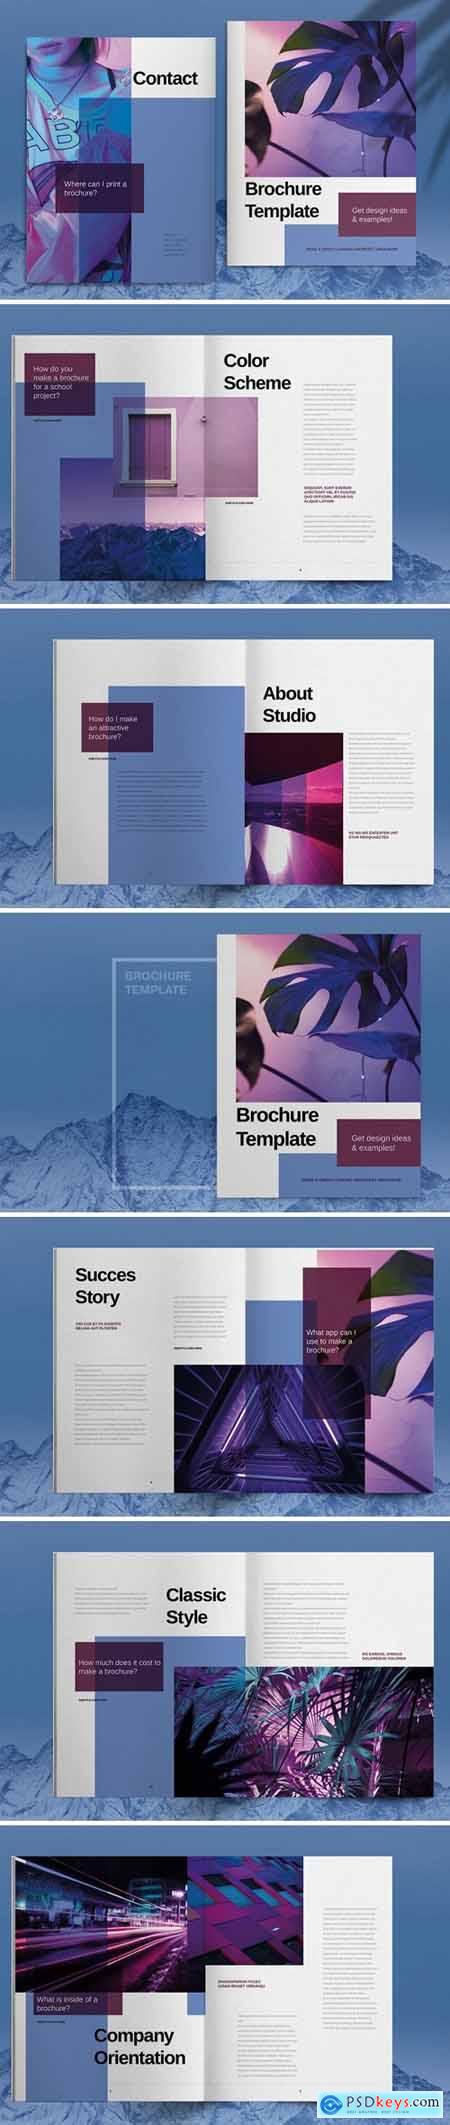 Purple Brochure Adobe Template